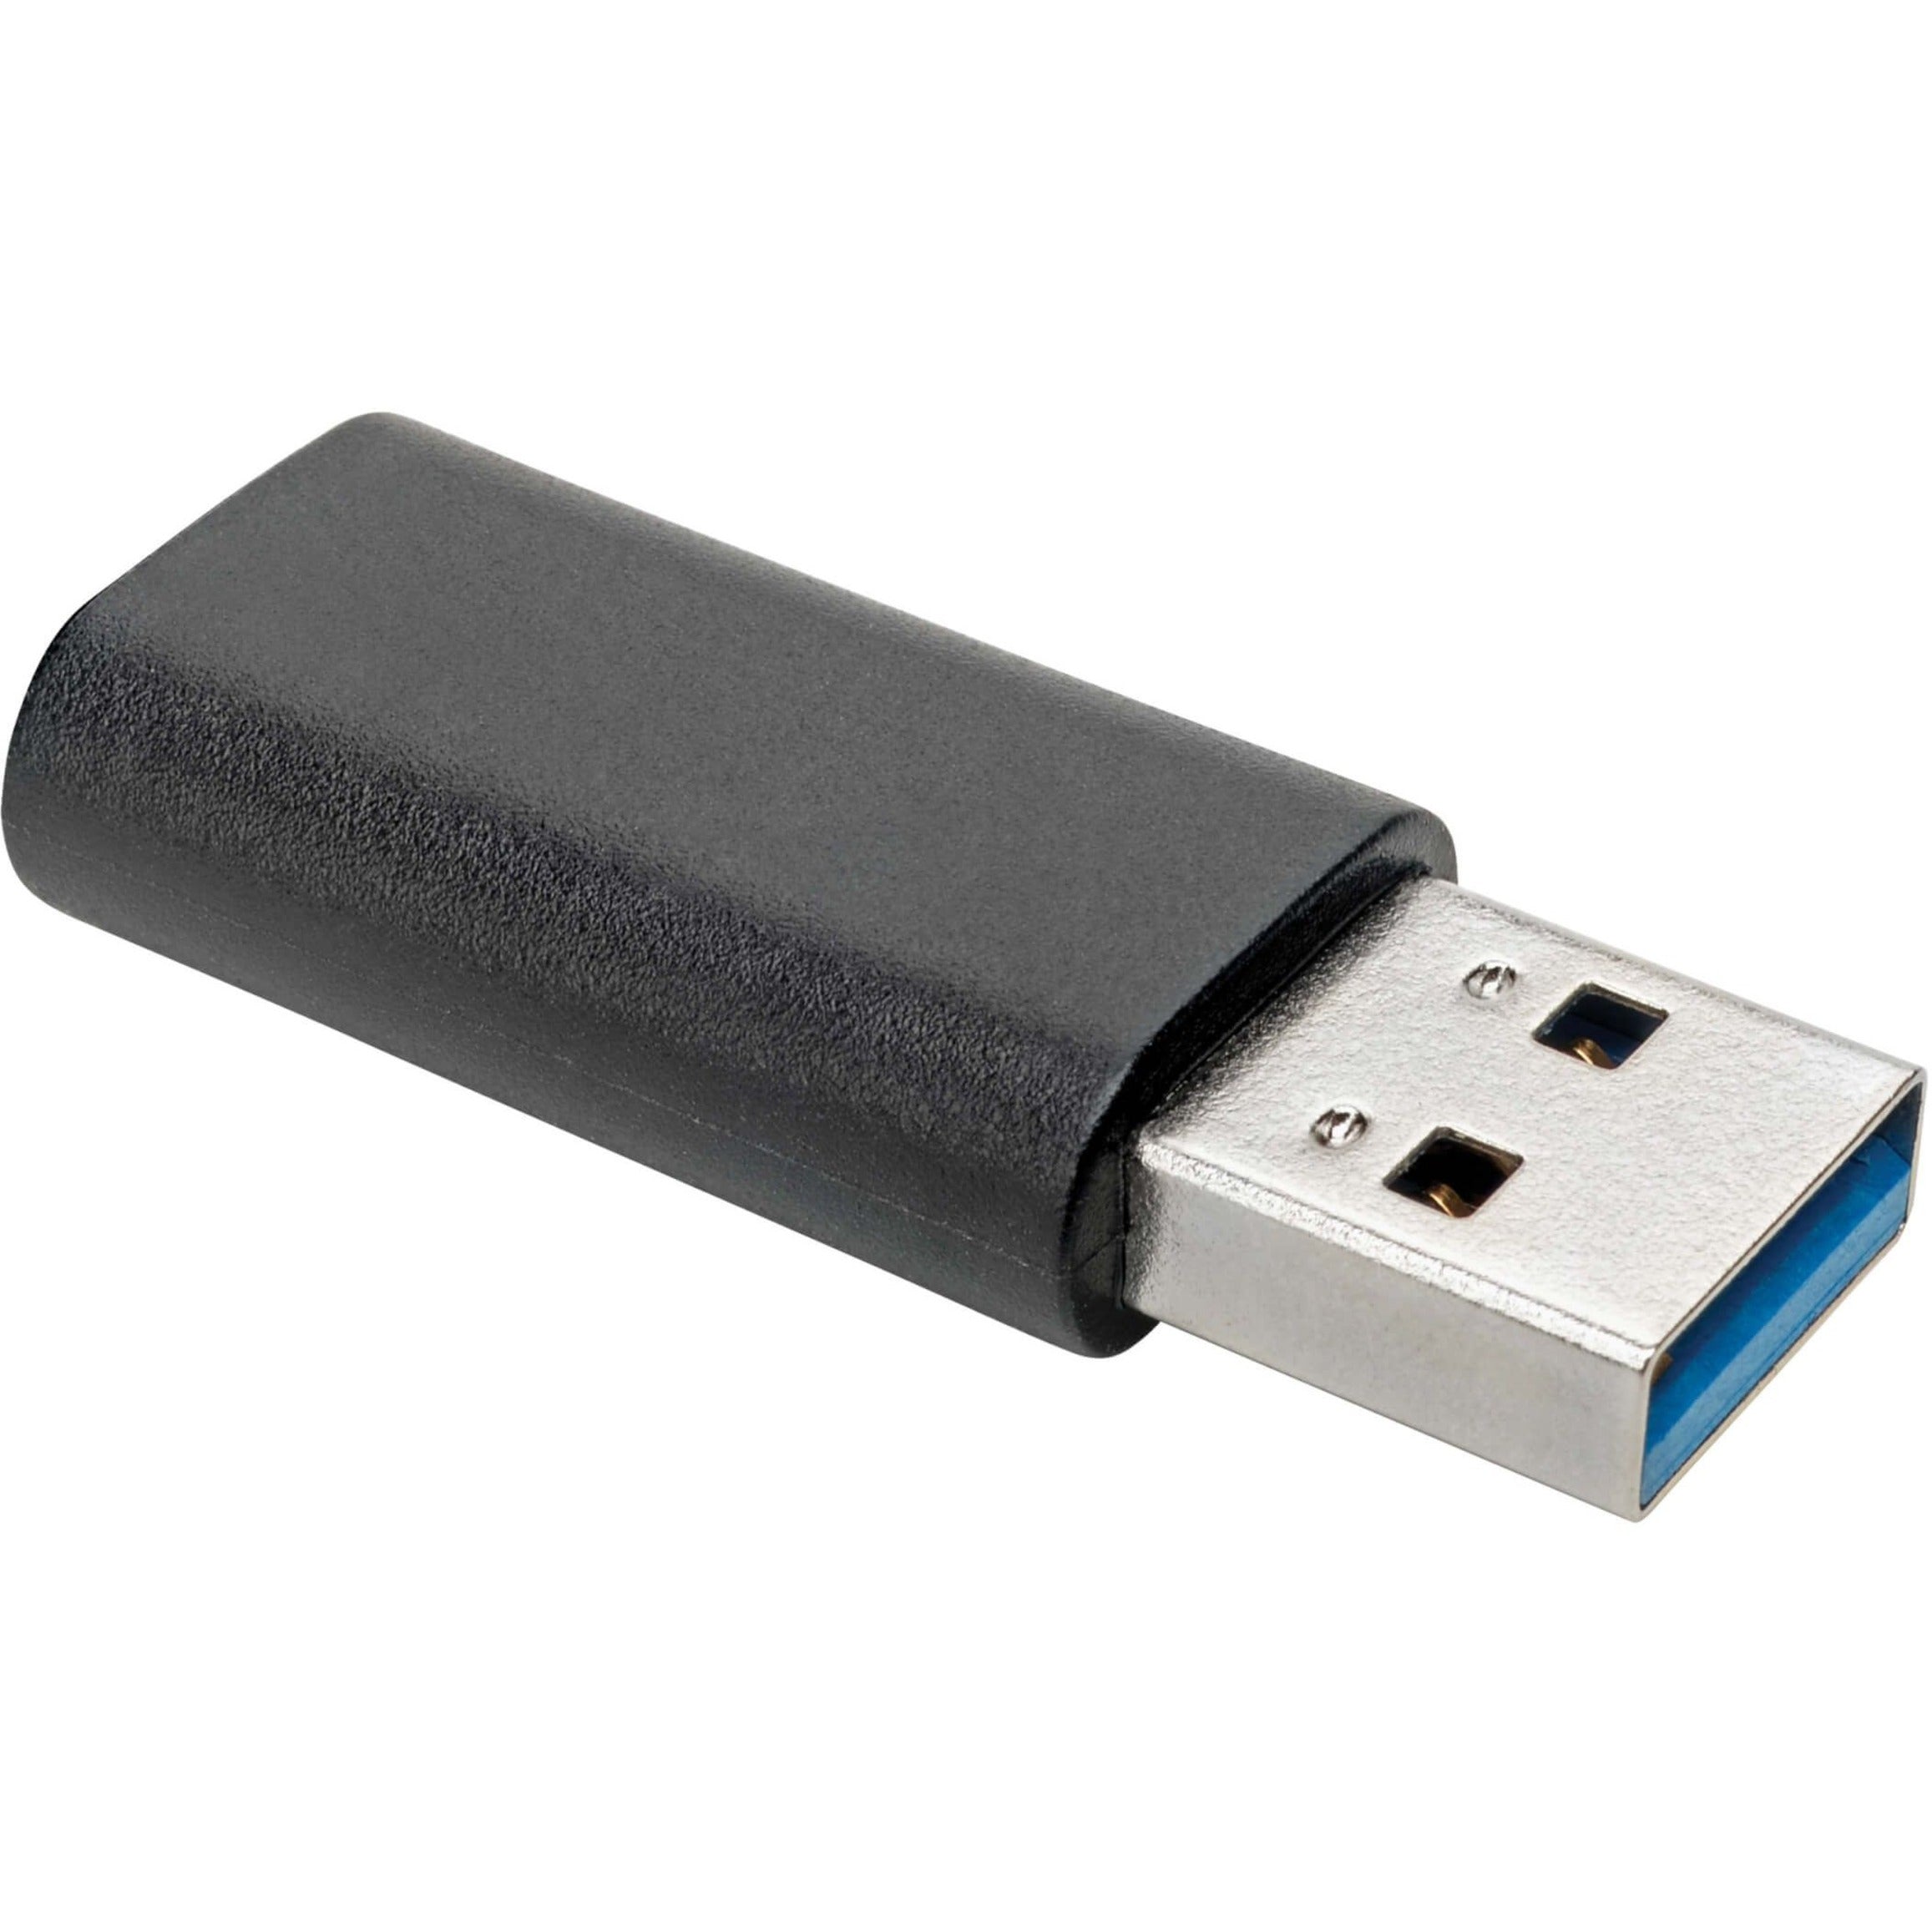 Jabra USB/USB-C Data Transfer Adapter (14208-38) – Network Hardwares